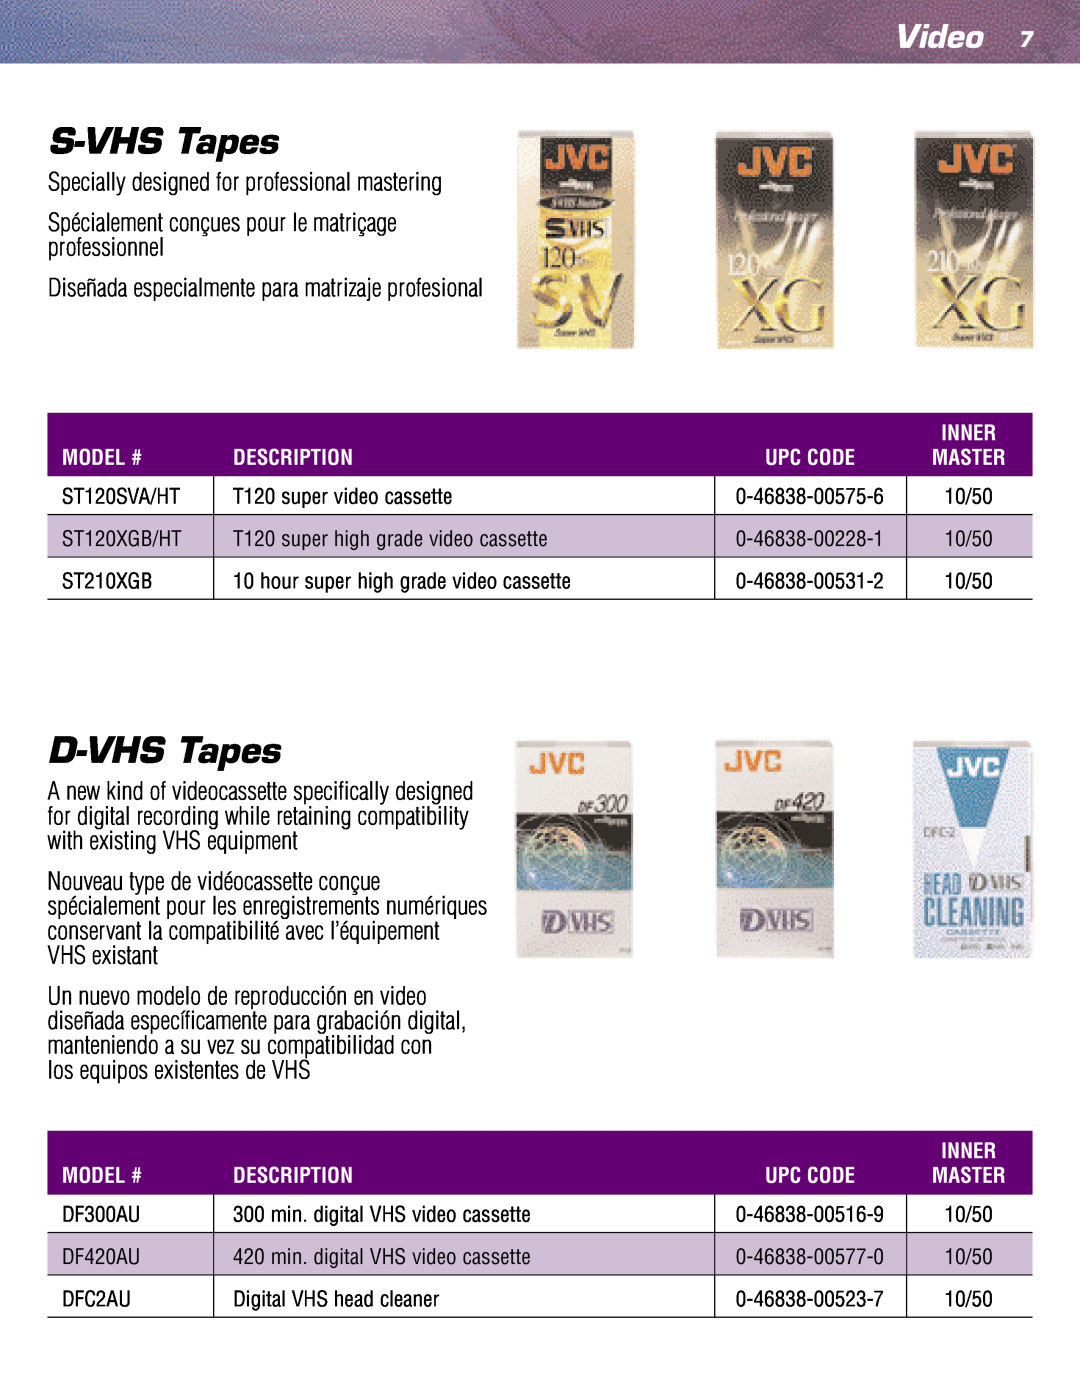 JVC TC35KL3P S-VHS Tapes, D-VHS Tapes, Video, Specially designed for professional mastering, Inner, Model #, Description 